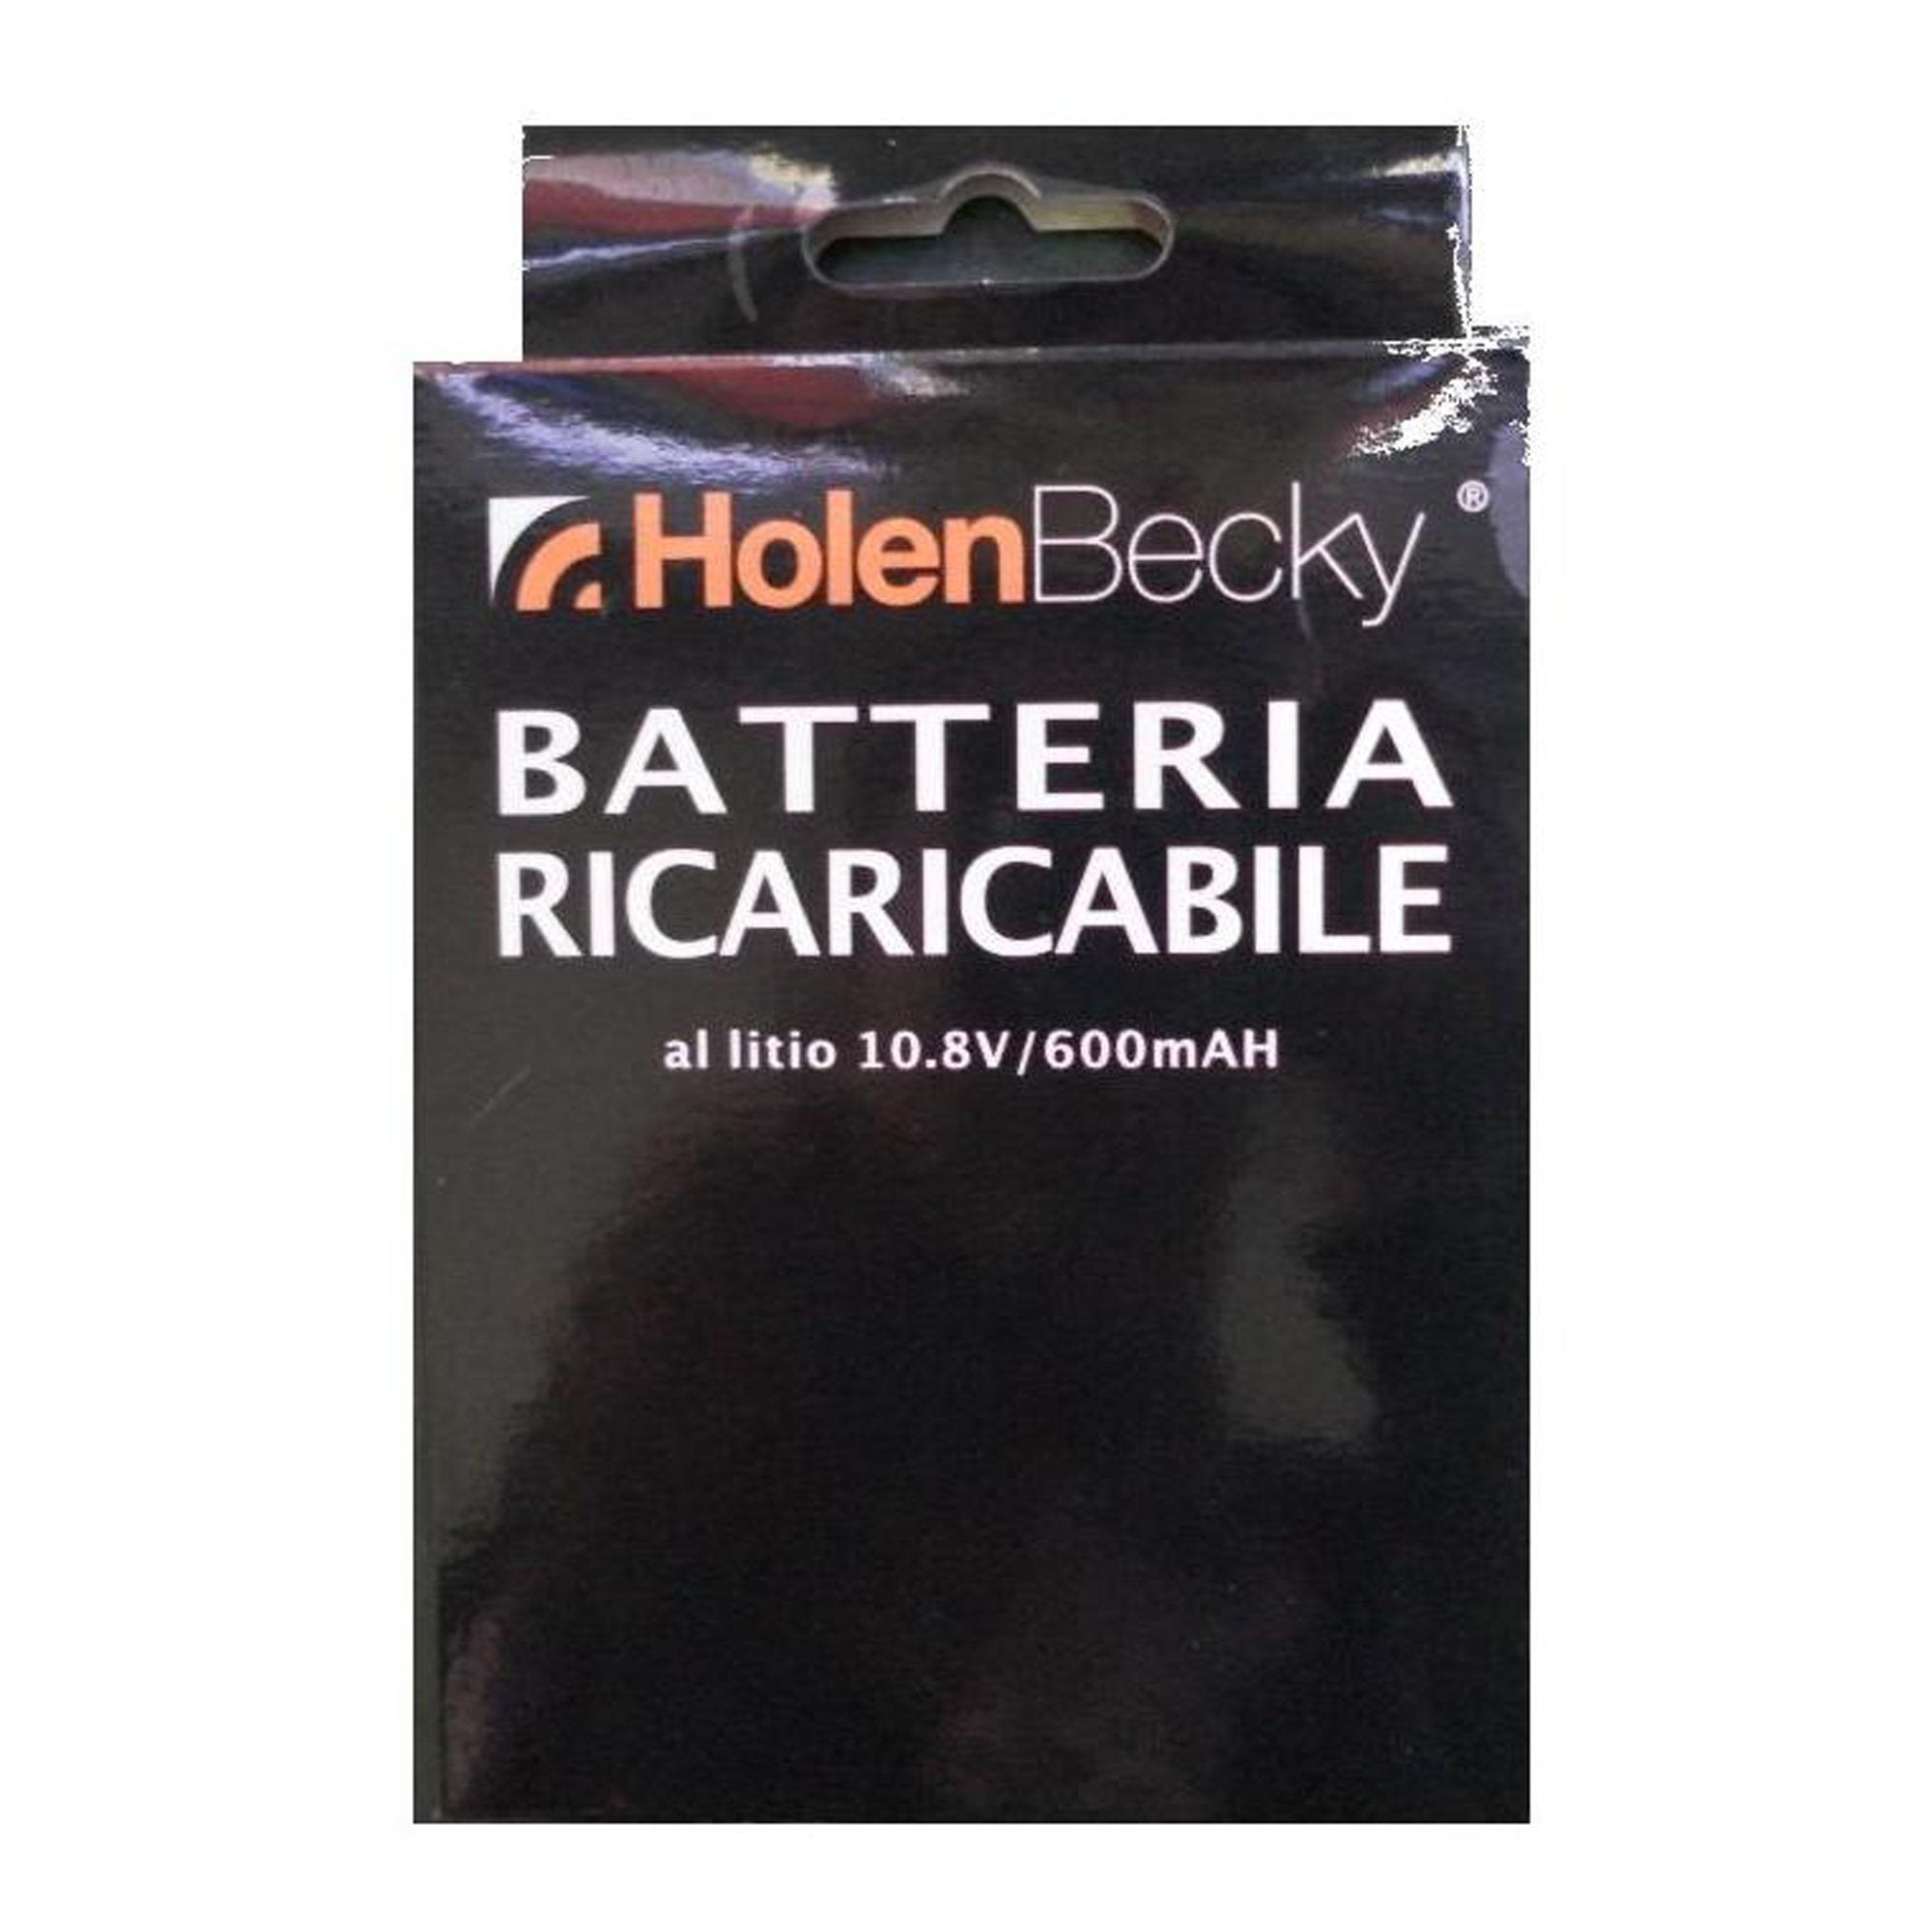 holenbecky-batteria-ricaricabile-litio-x-verifica-banconote-ht-7-0-ht6060